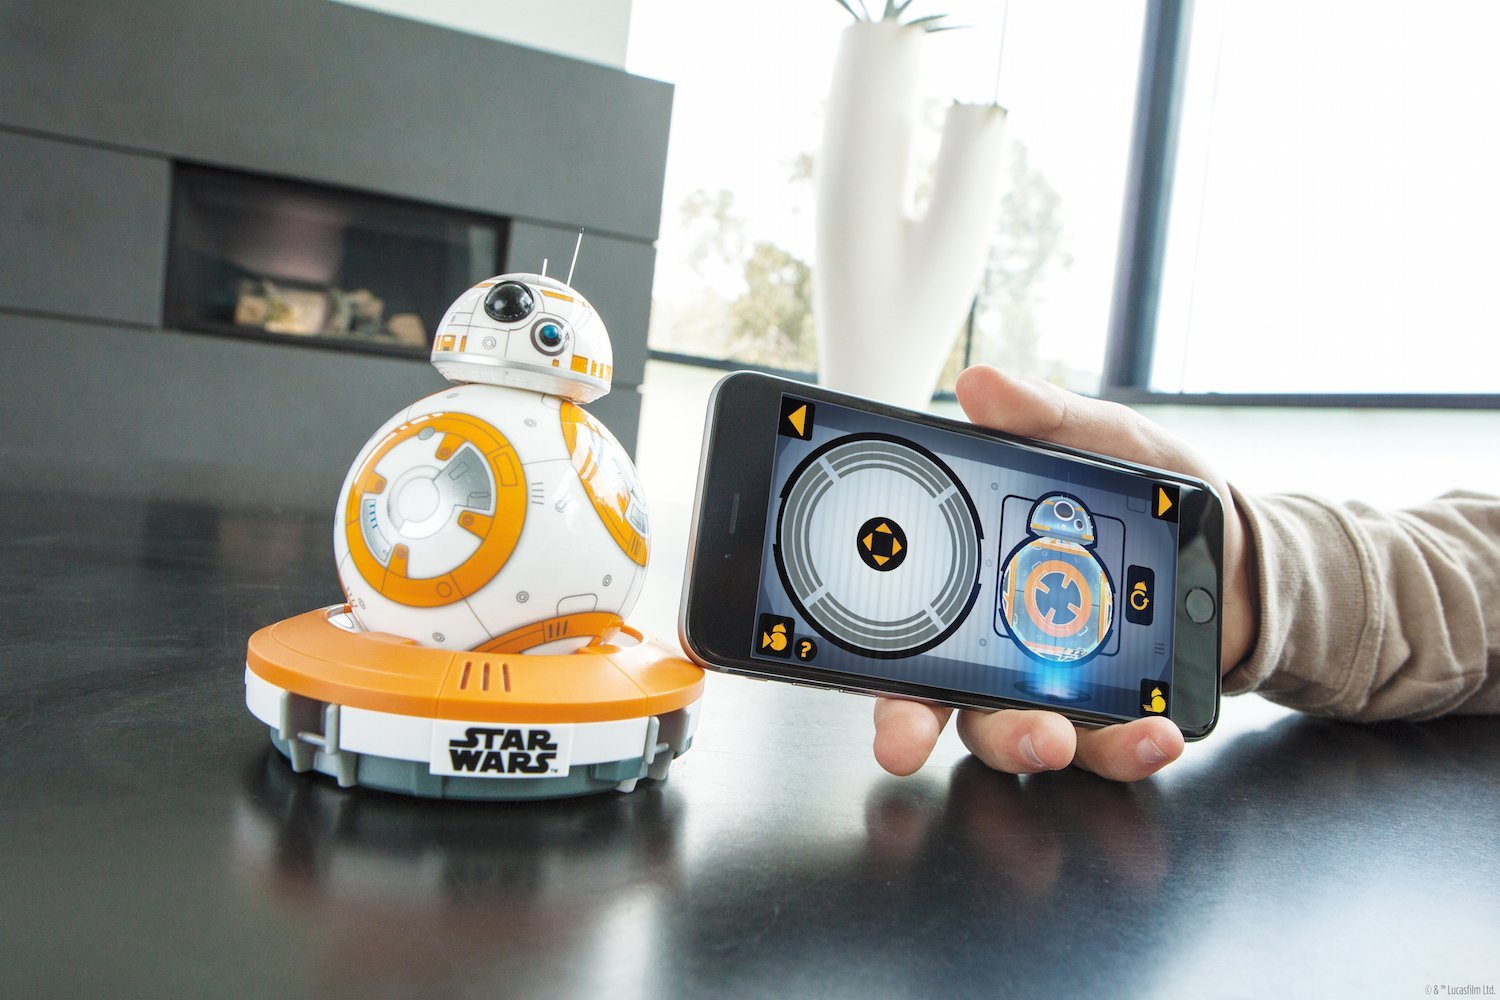 Star Wars BB-8 app controlled robot